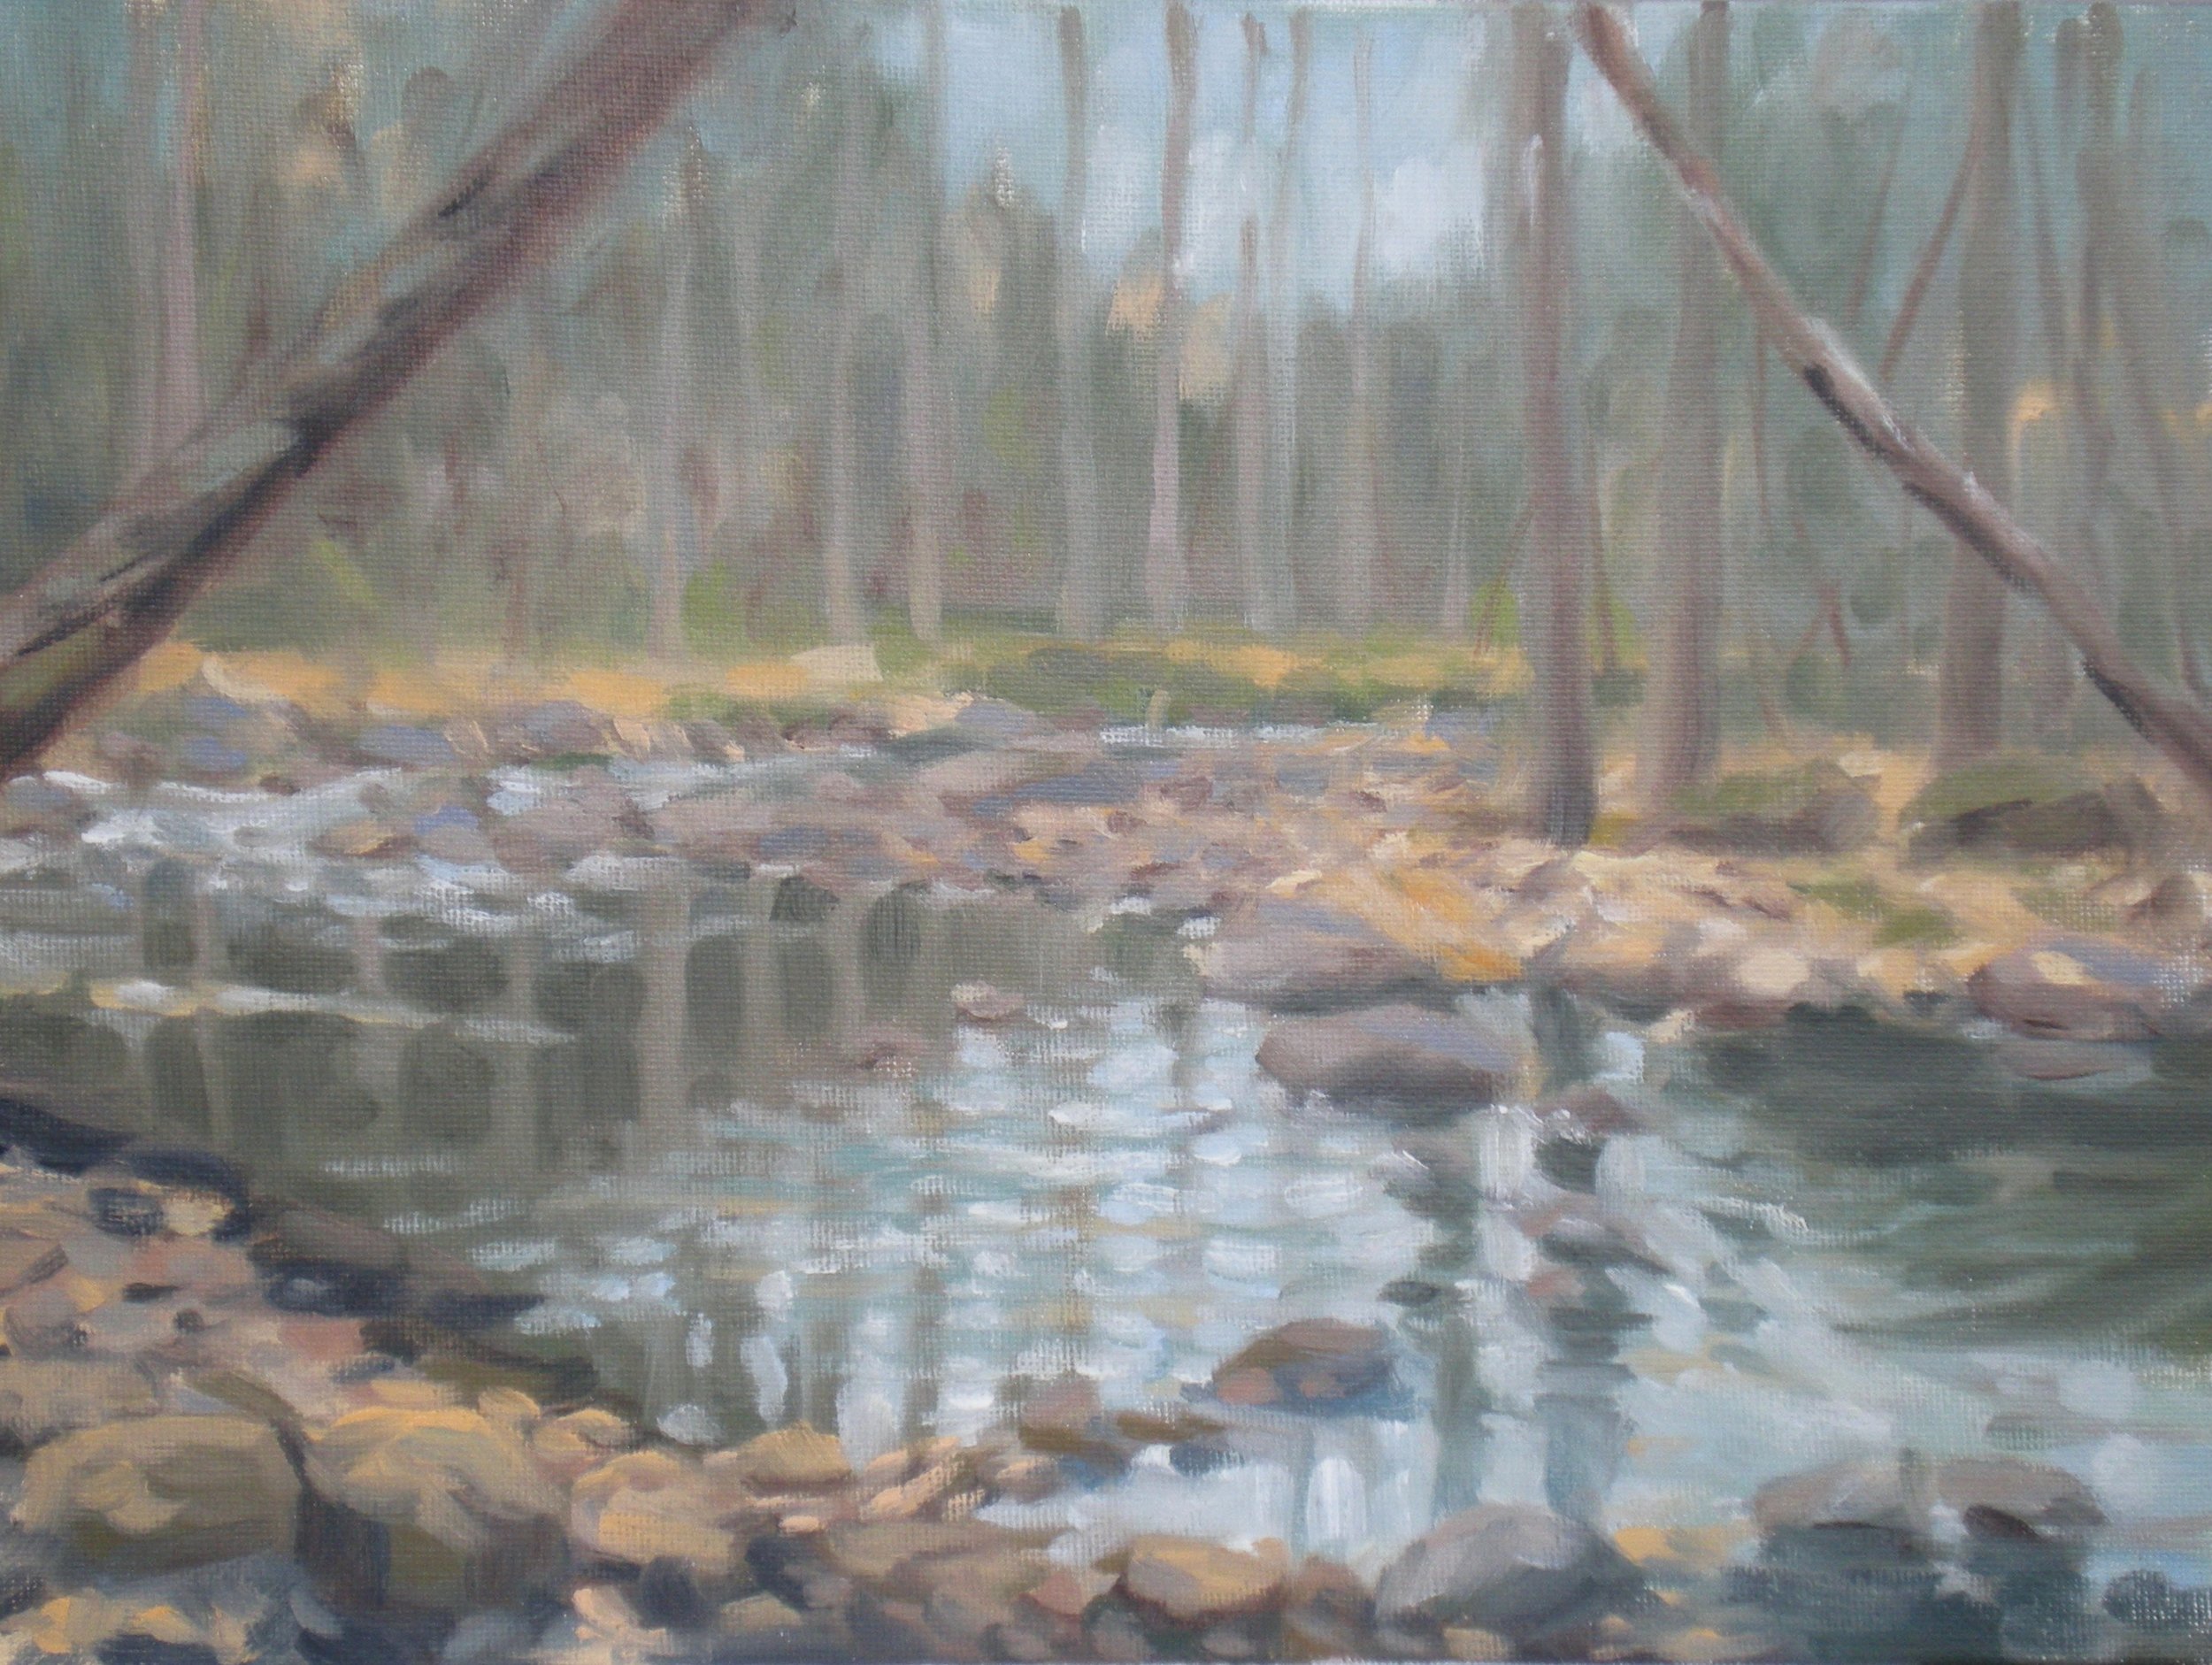 Shallow Stream (copy), Oil on canvas, 9x12